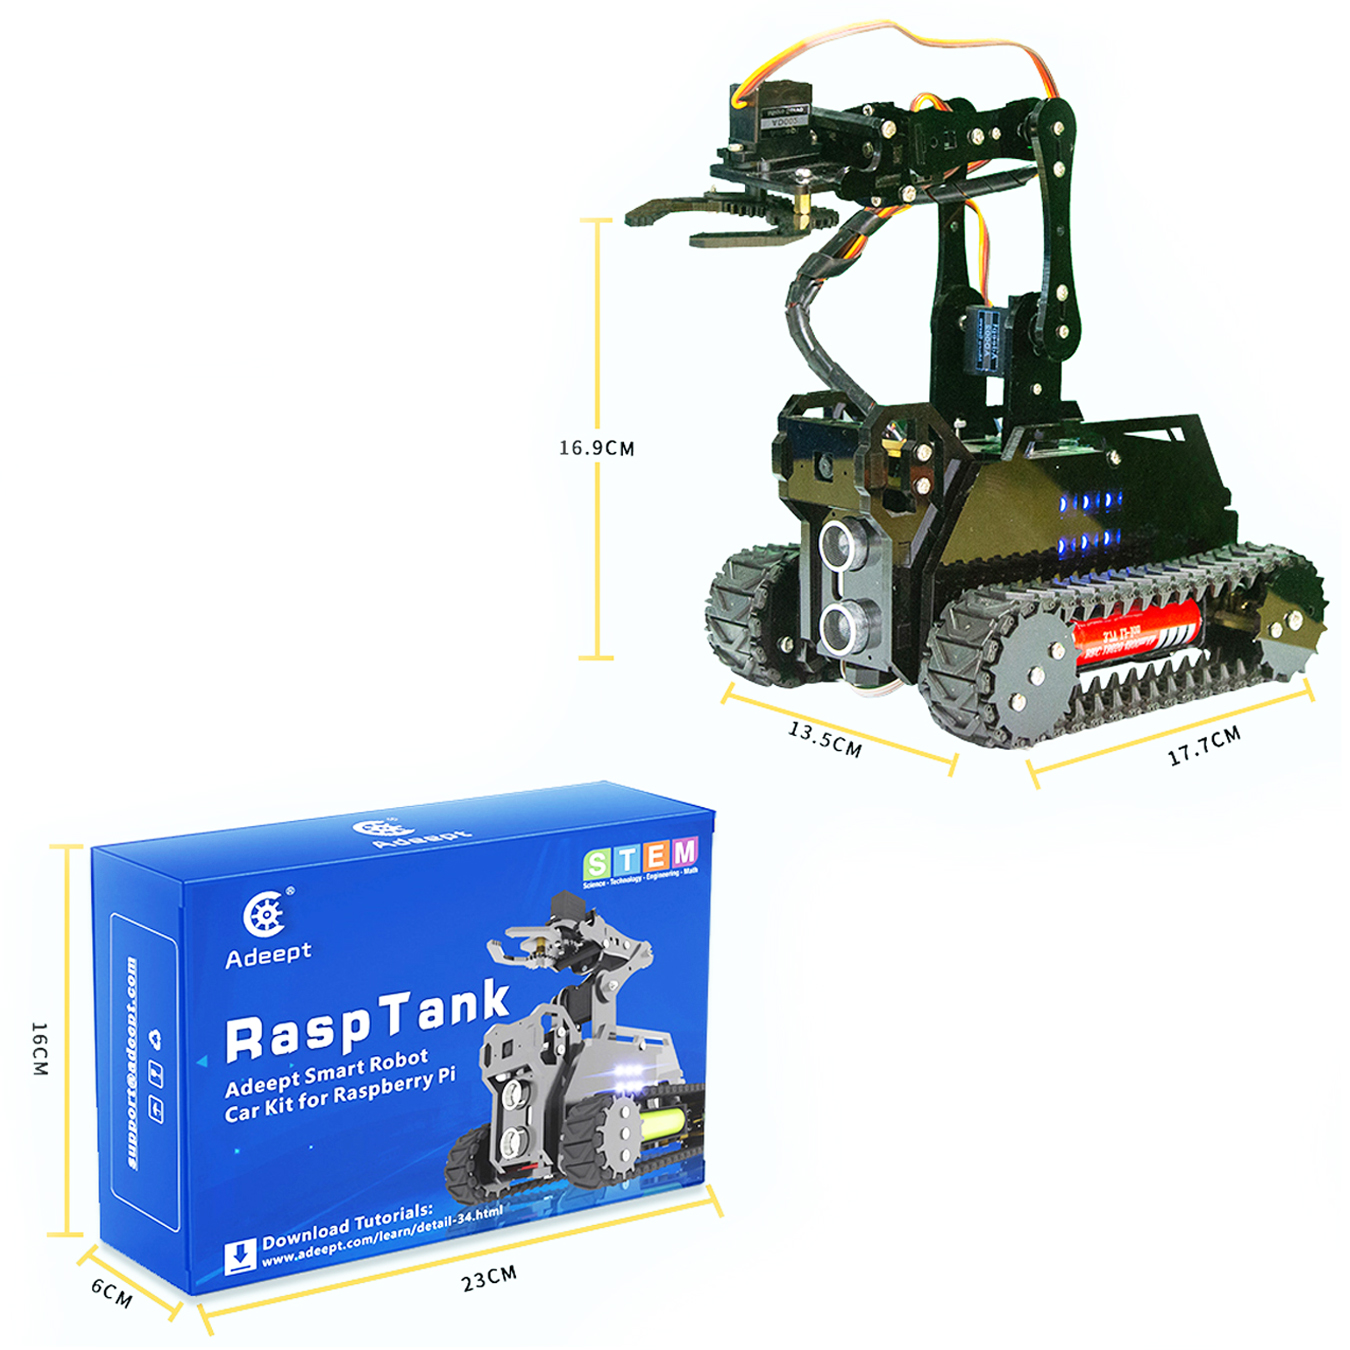 Adeept RaspTank WiFi Smart Robot Tank Kit for Raspberry Pi - Click to Enlarge